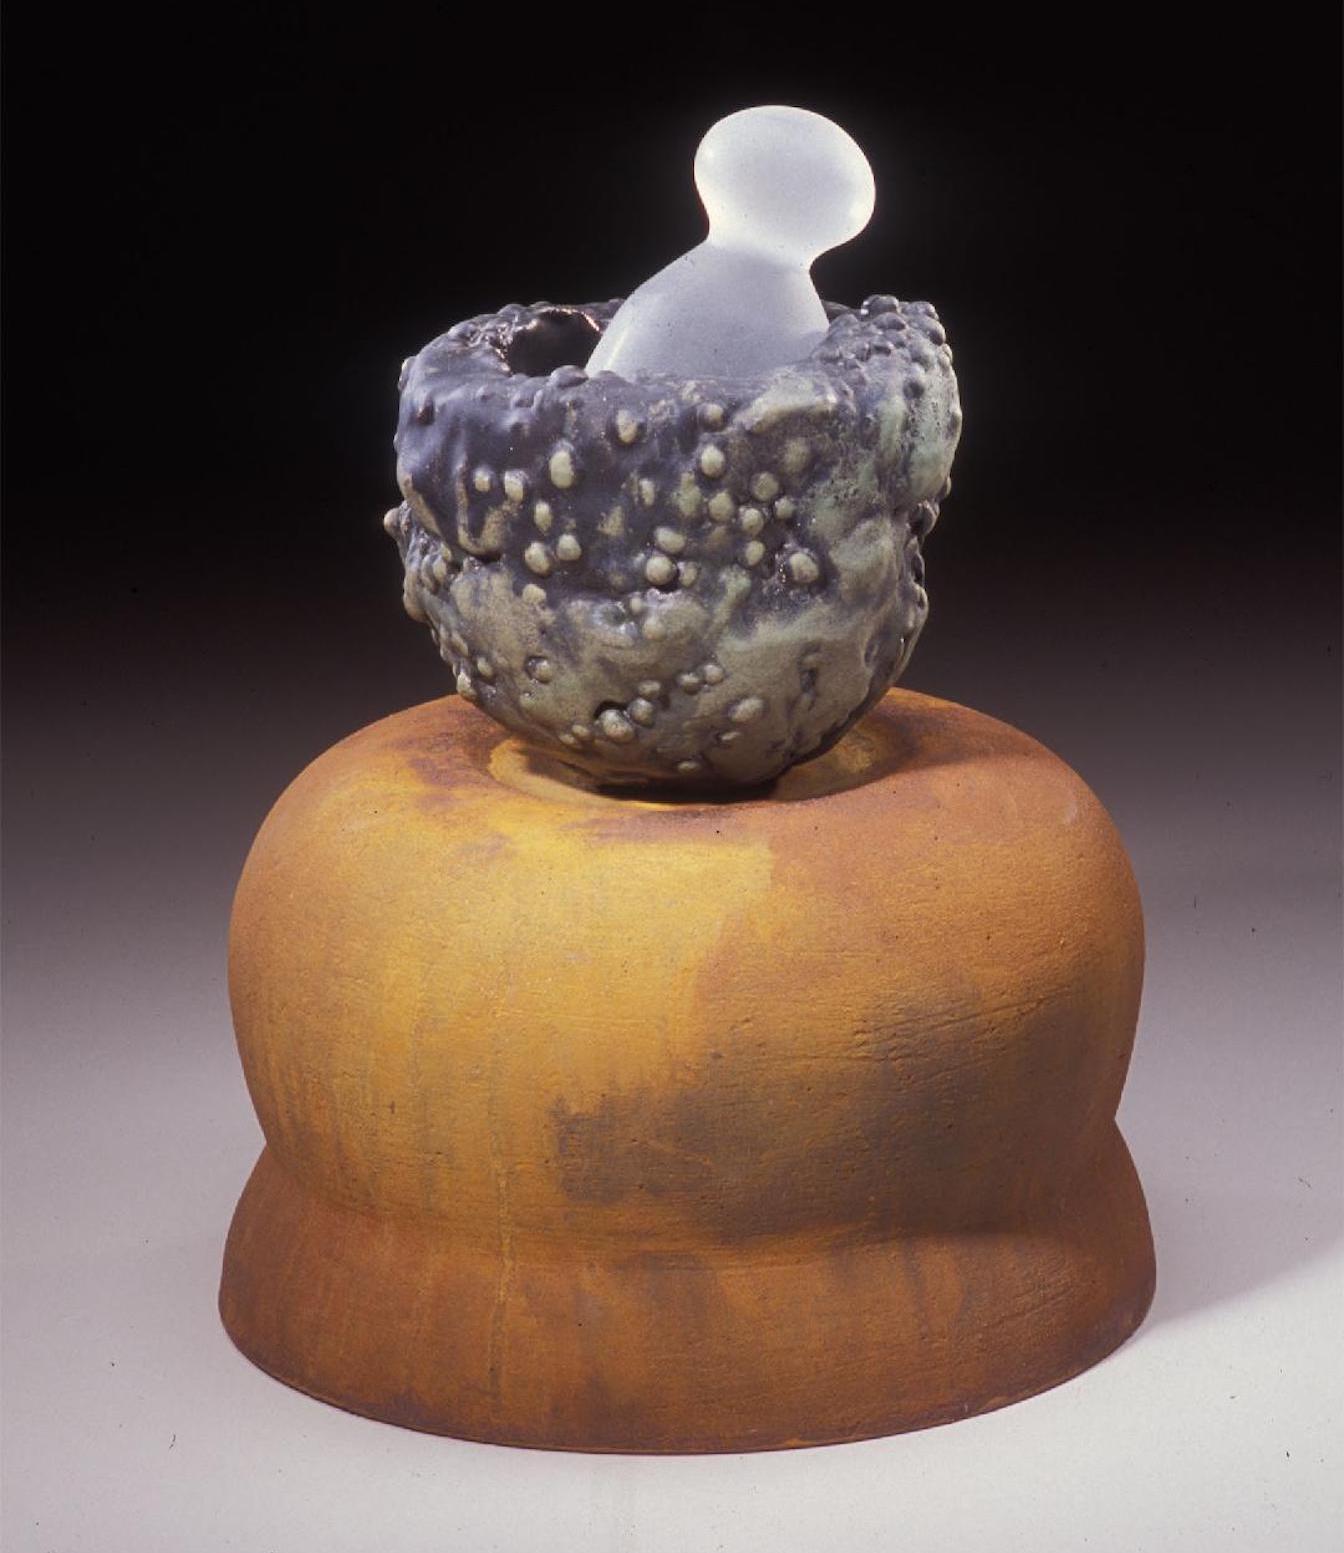 American Richard Hirsch Ceramic Mortar and Glass Pestle Sculpture, 2007 For Sale